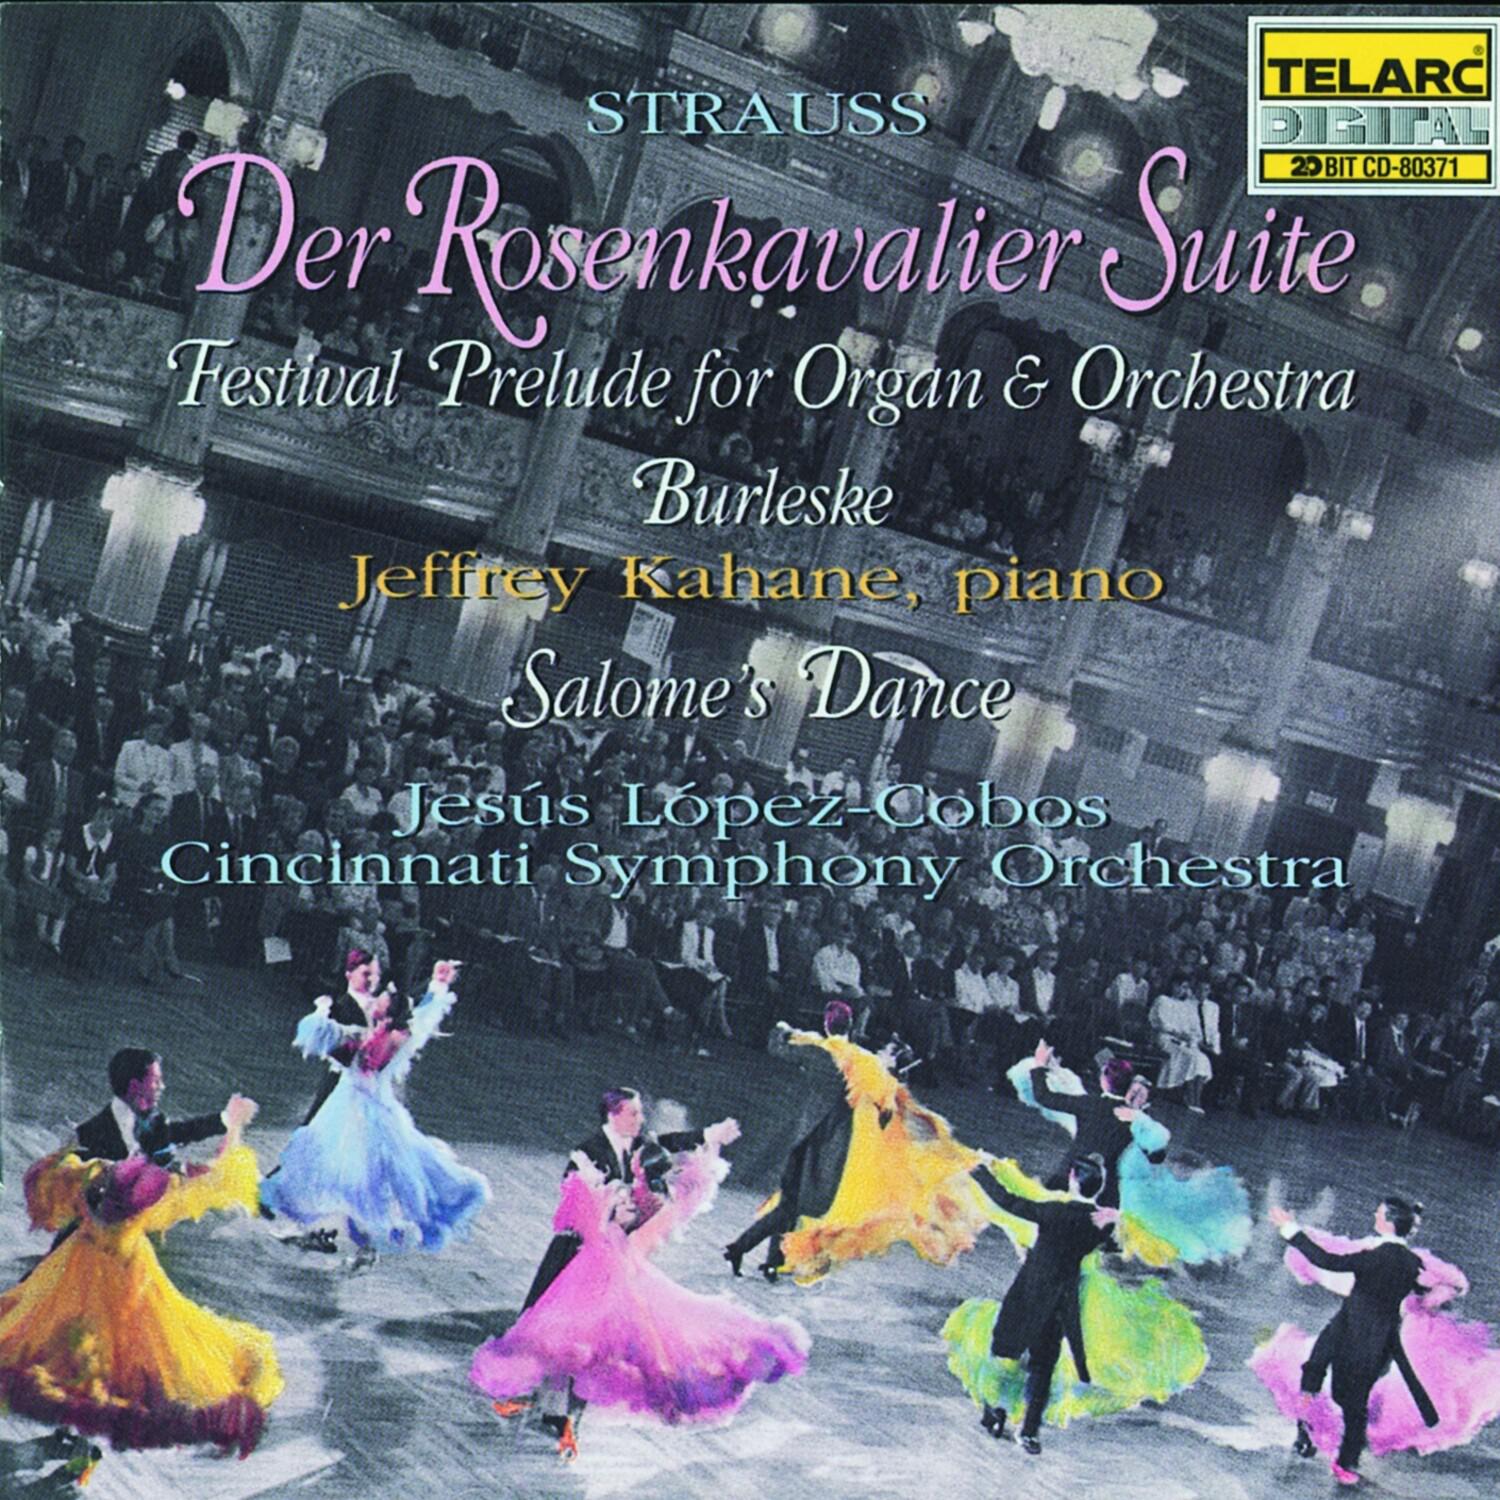 Strauss: Der Rosenkavalier Suite, Festival Prelude For Organ And Orchestra, Burleske & Salome's Dance